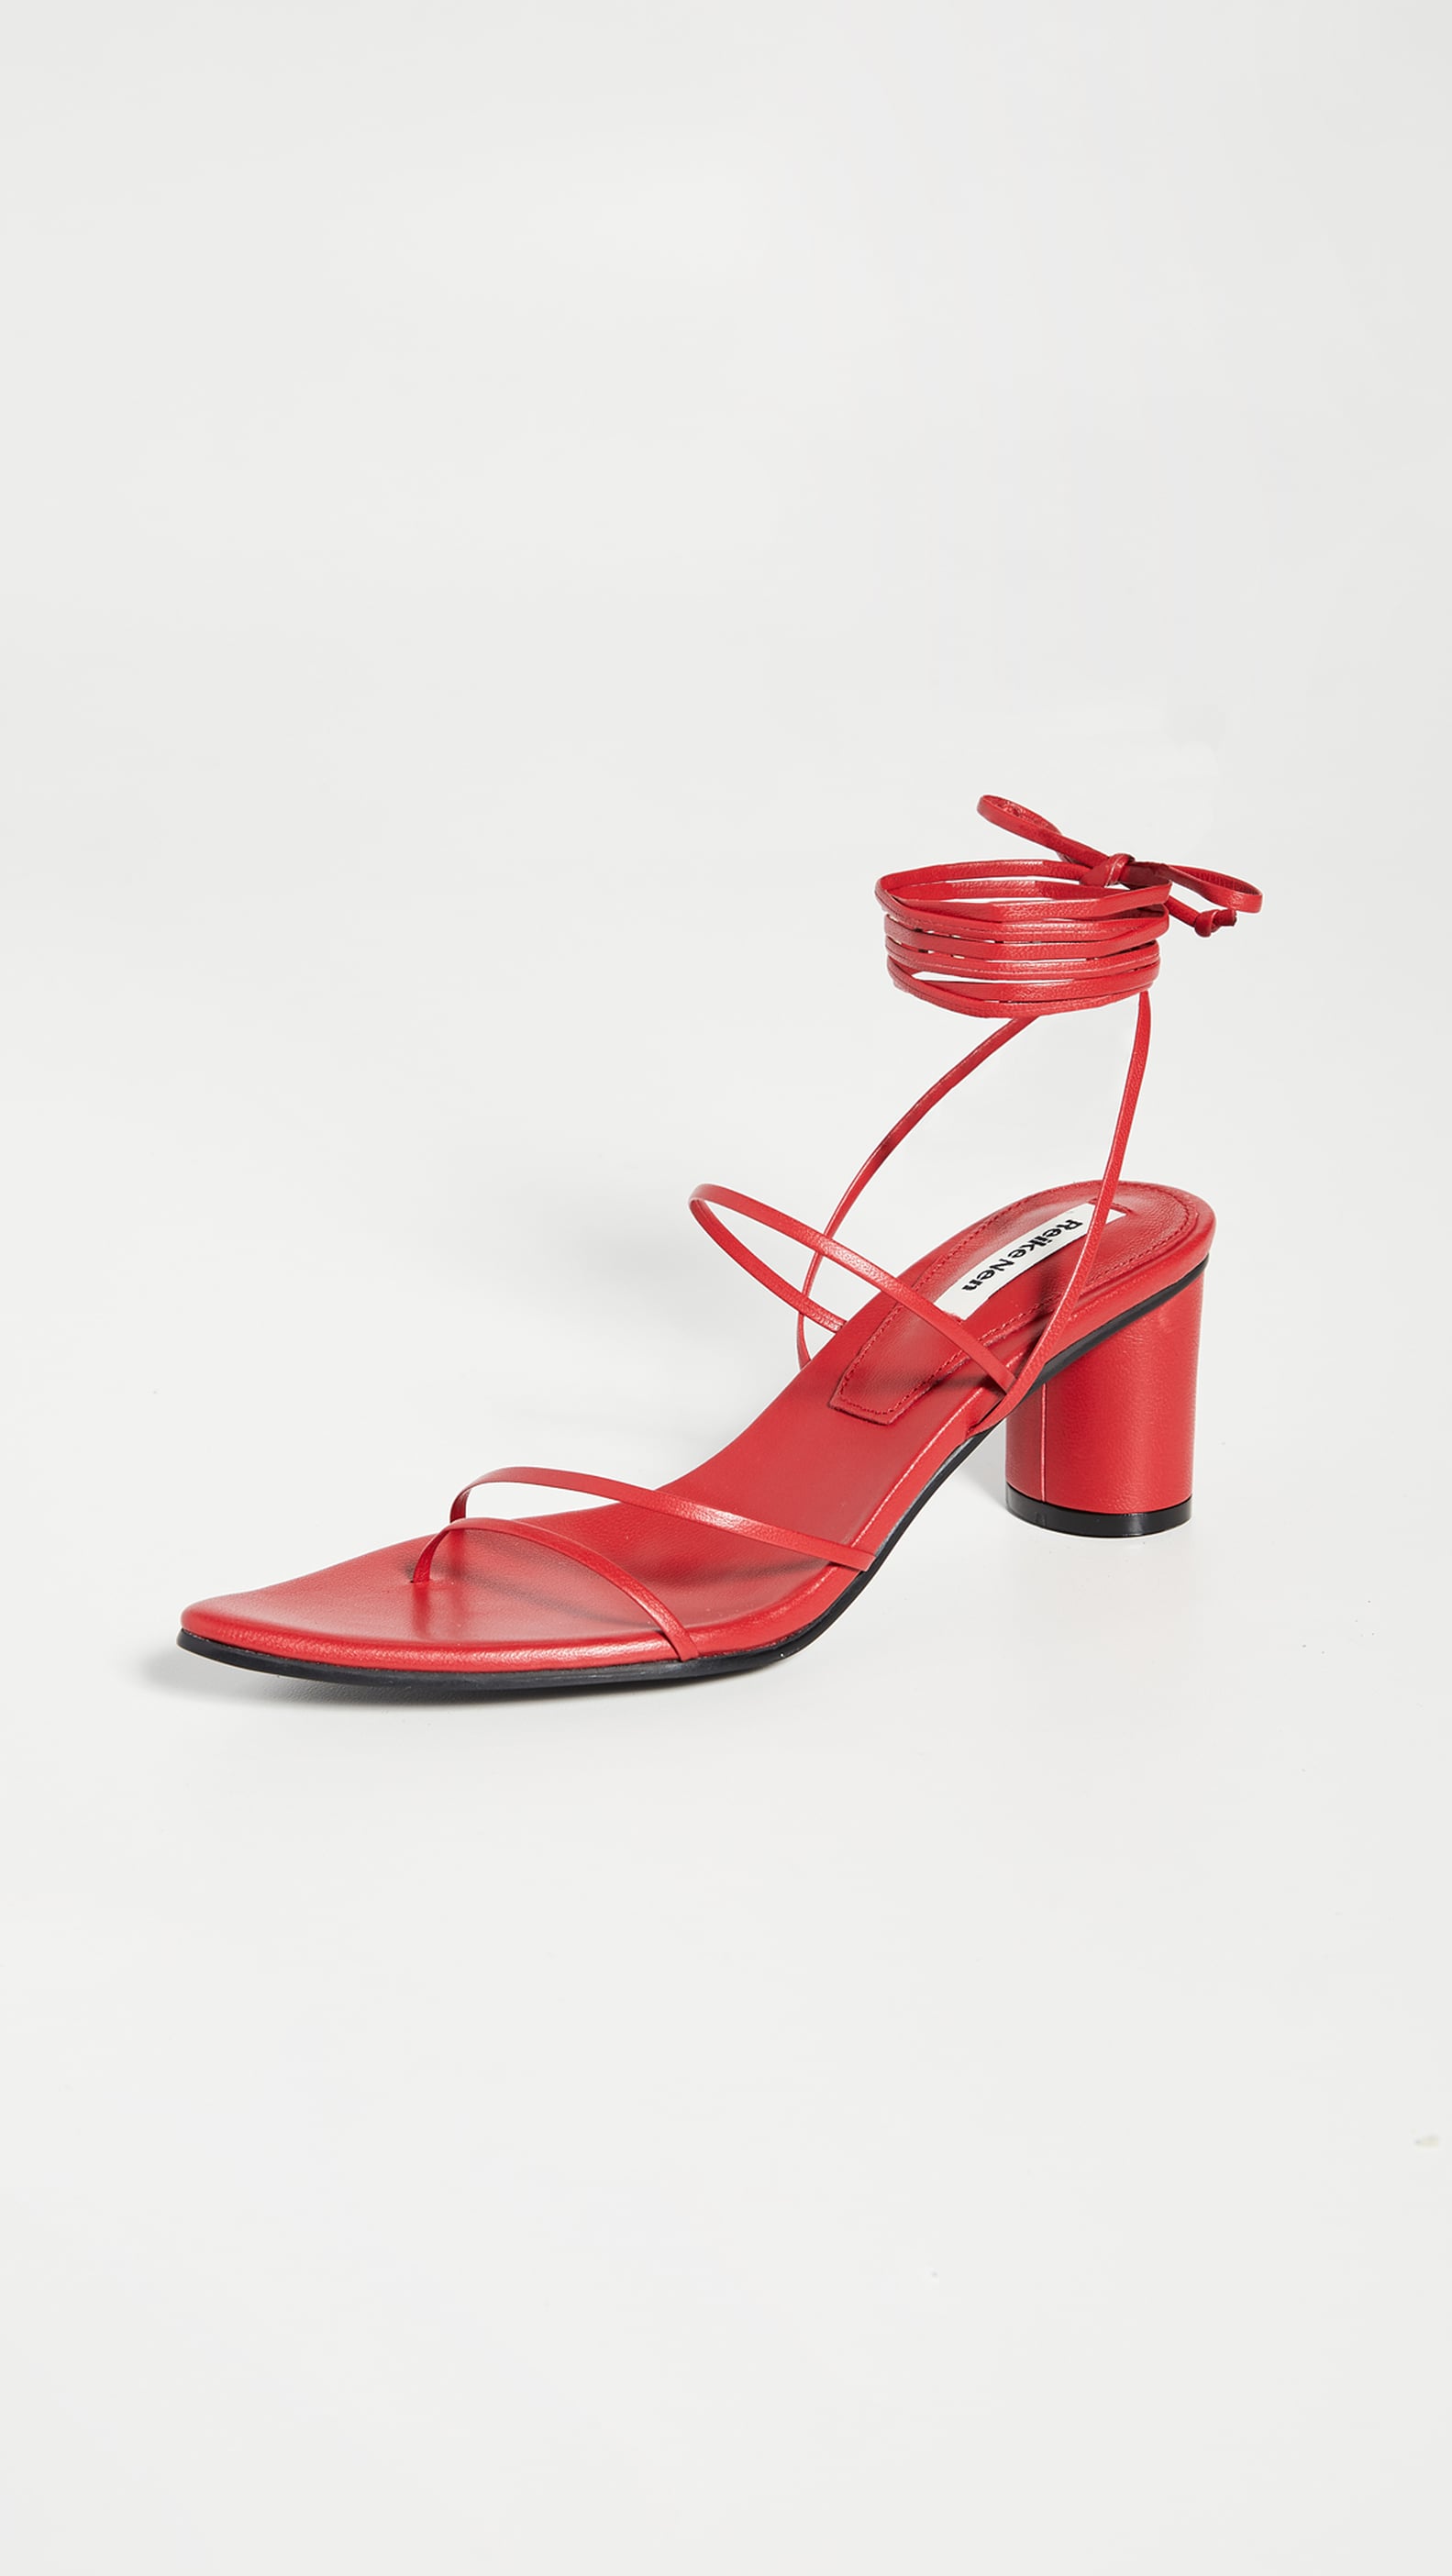 Hailey Baldwin's Red Lace-Up Heels | POPSUGAR Fashion